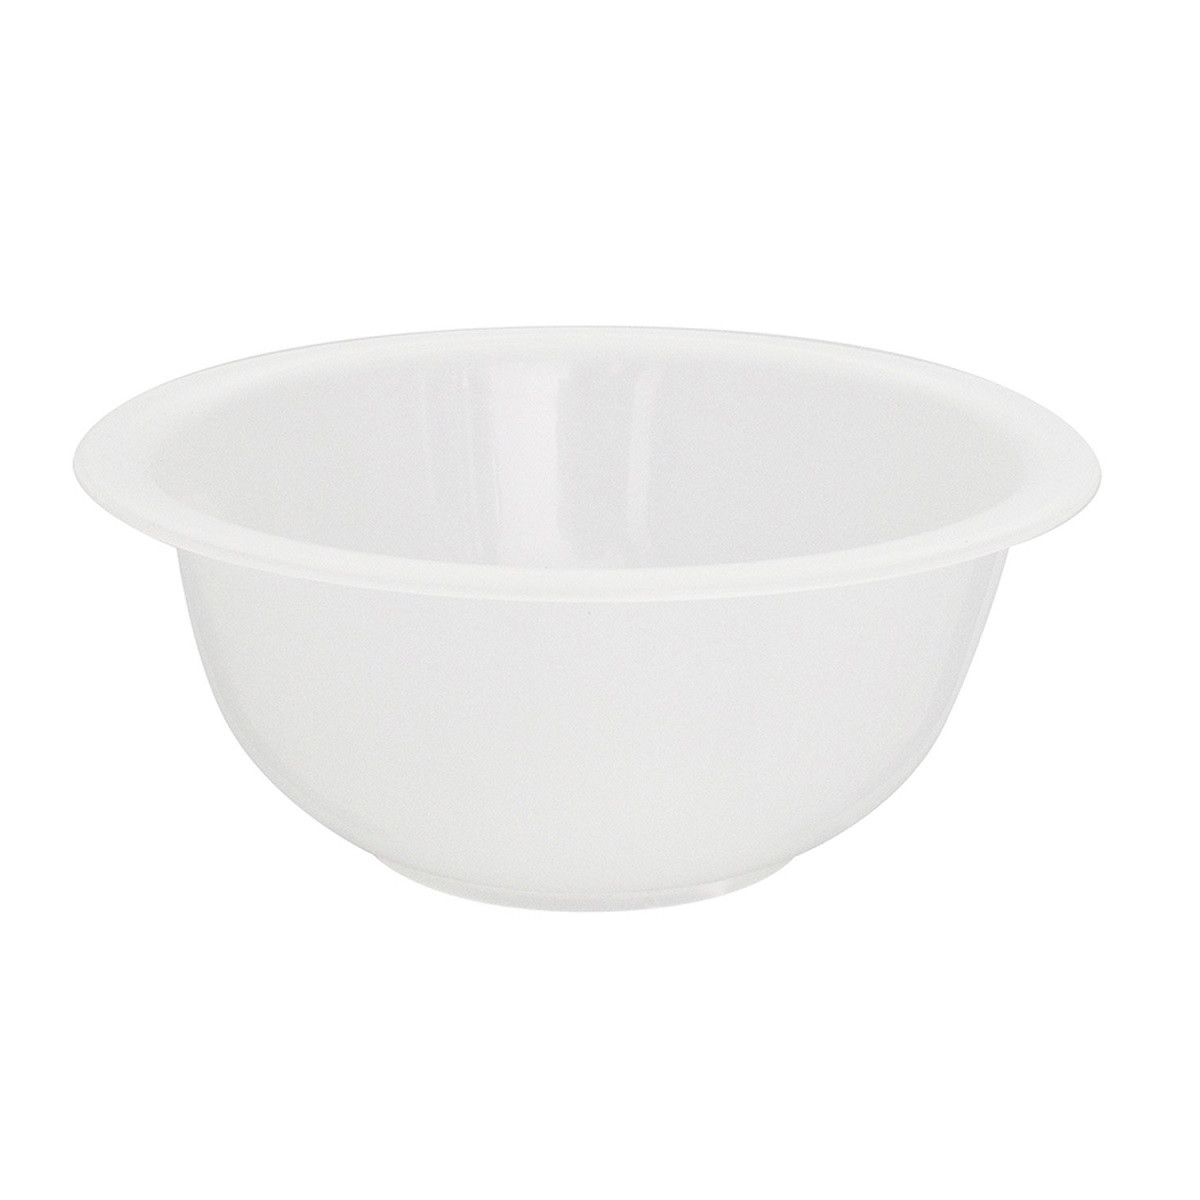 Frying bowl plastic, 24 cm.